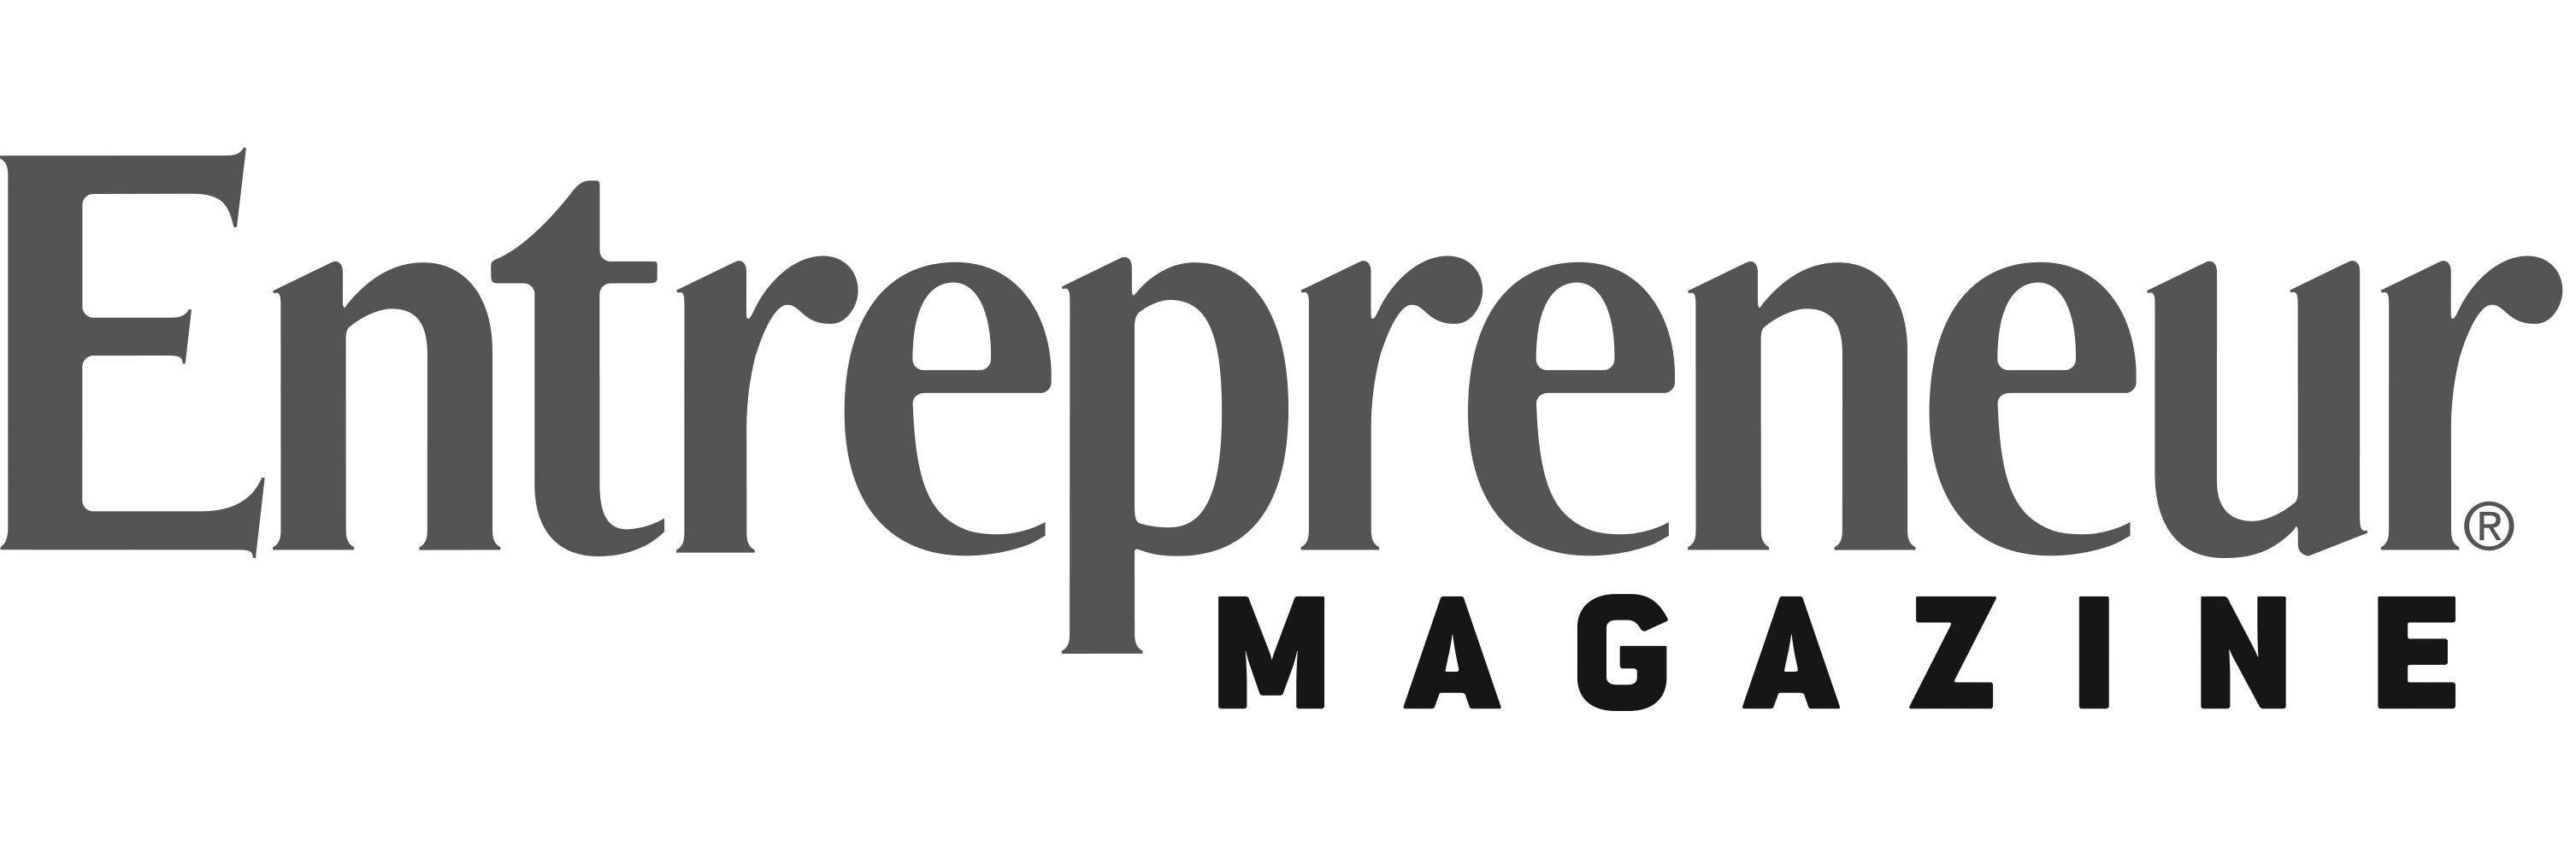 Entrepreneur Magazine Logo - entrepreneur magazine logo - Bold